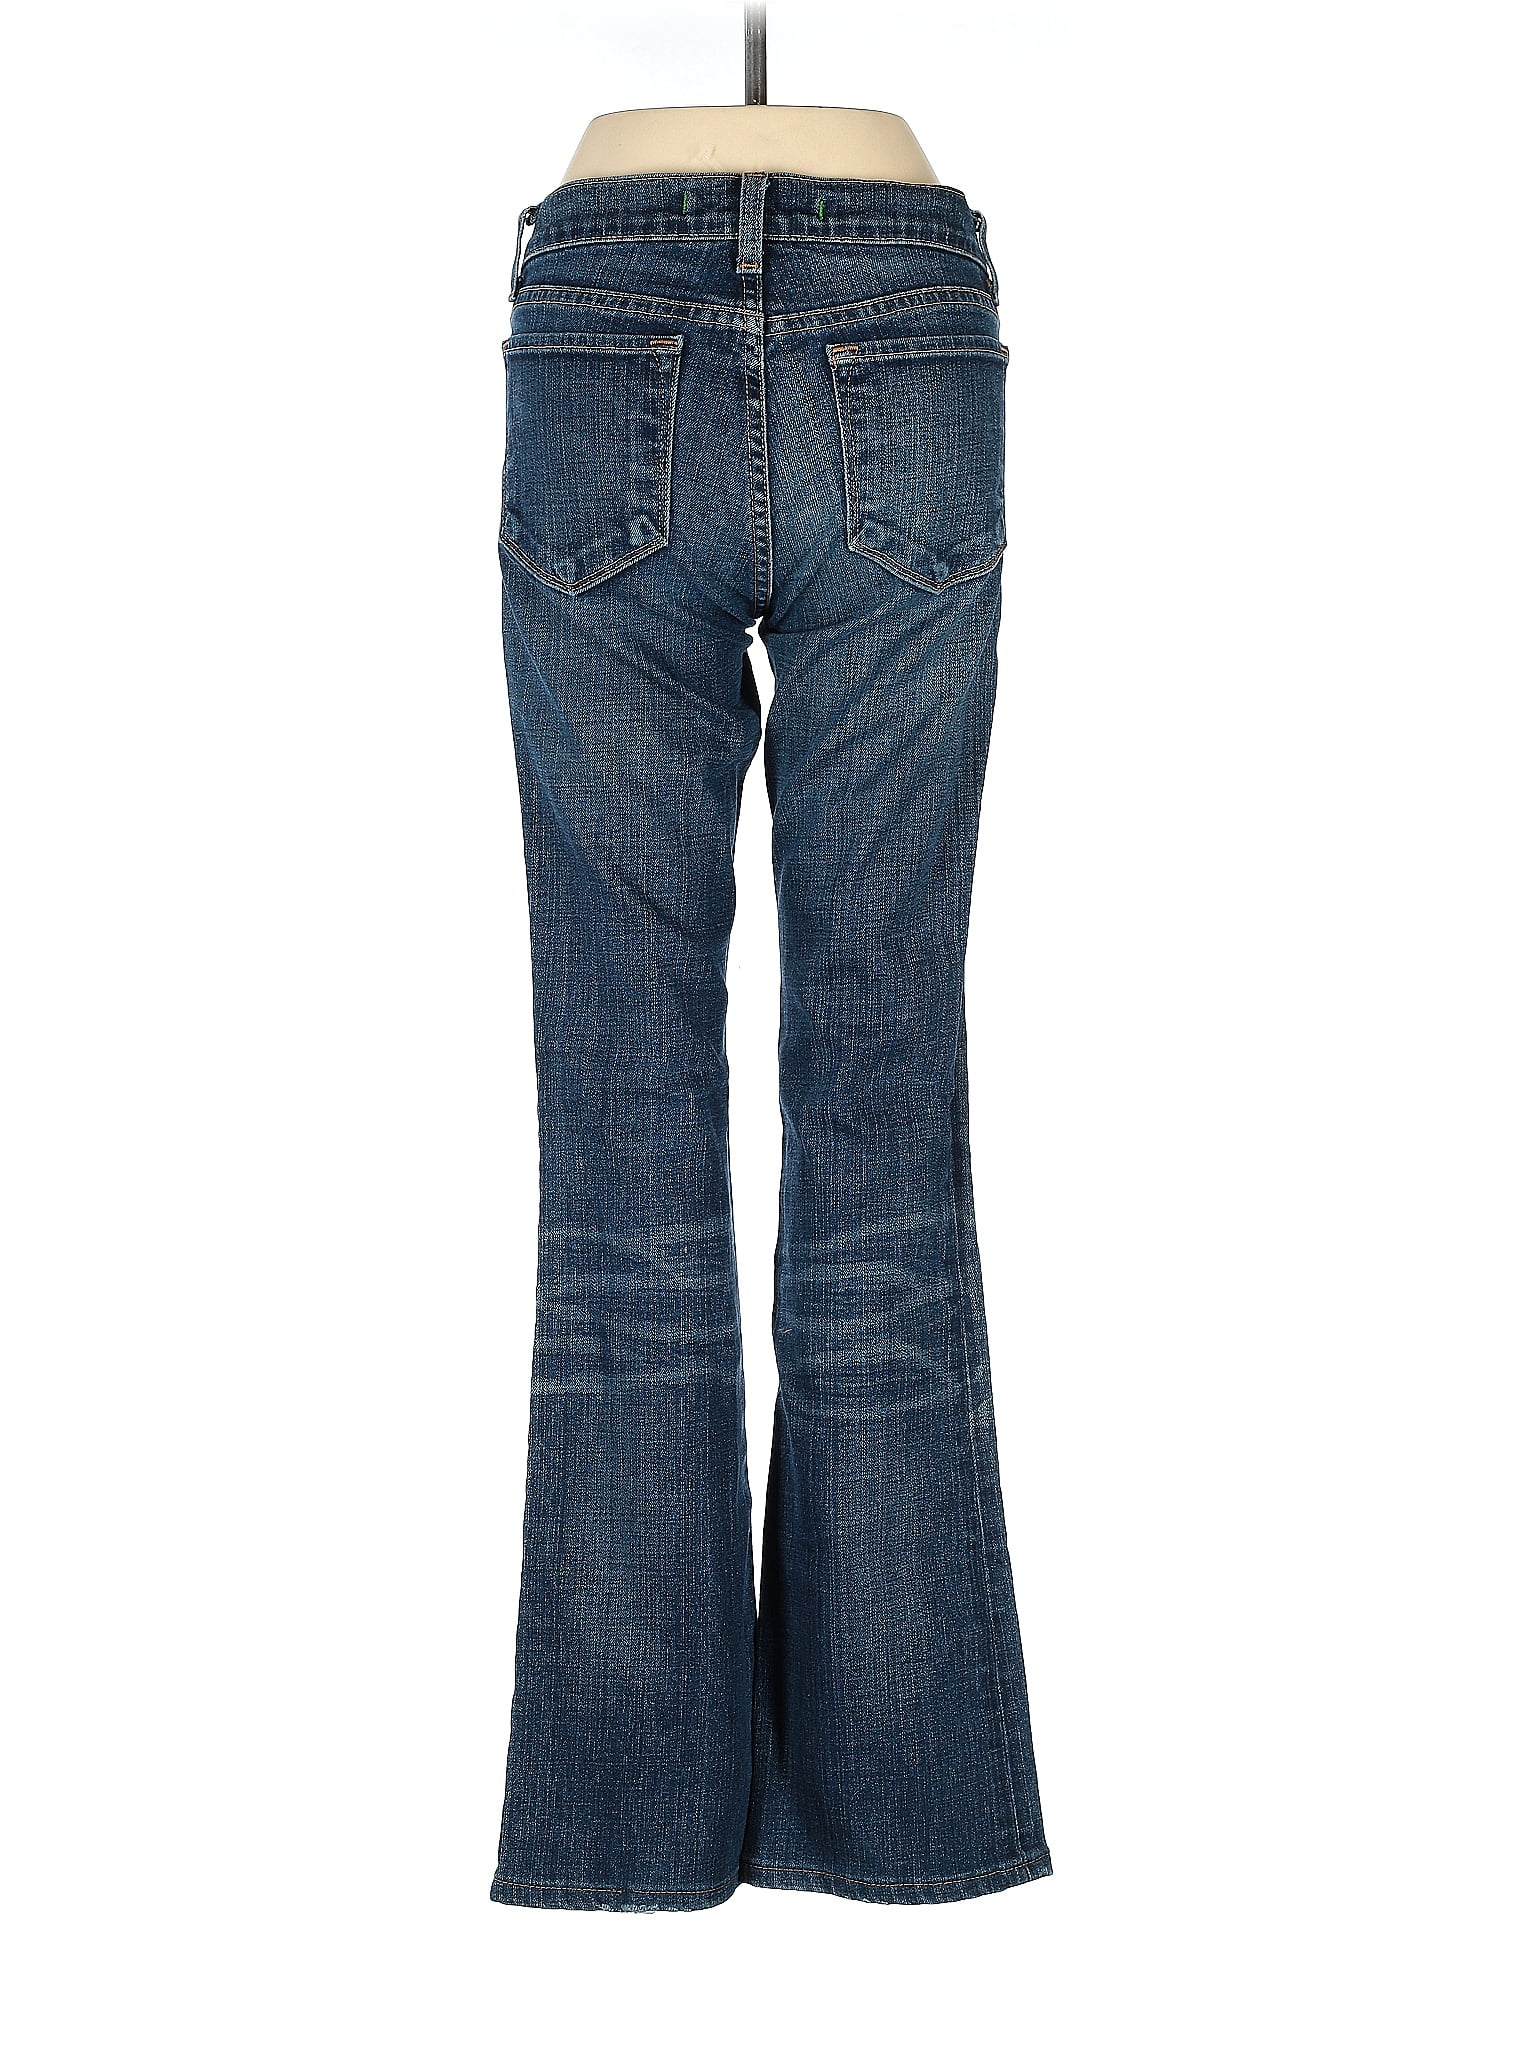 J Brand BCBG Max Azria Womens Skinny Straight Pants Jeans Blue